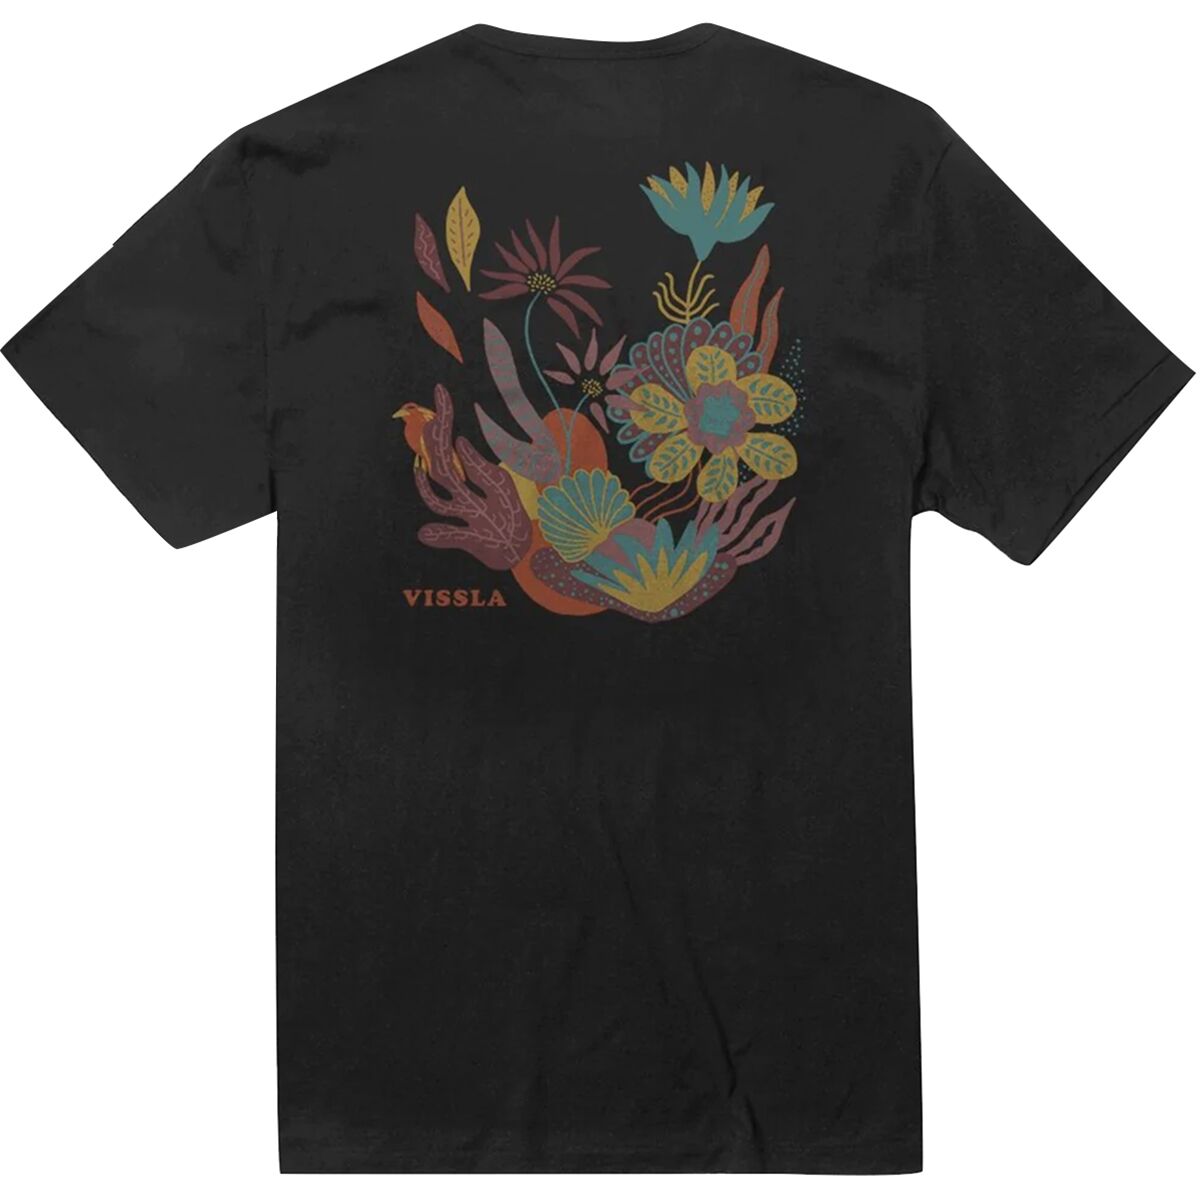 Vissla Coral Visions Organic Short-Sleeve T-Shirt - Men's